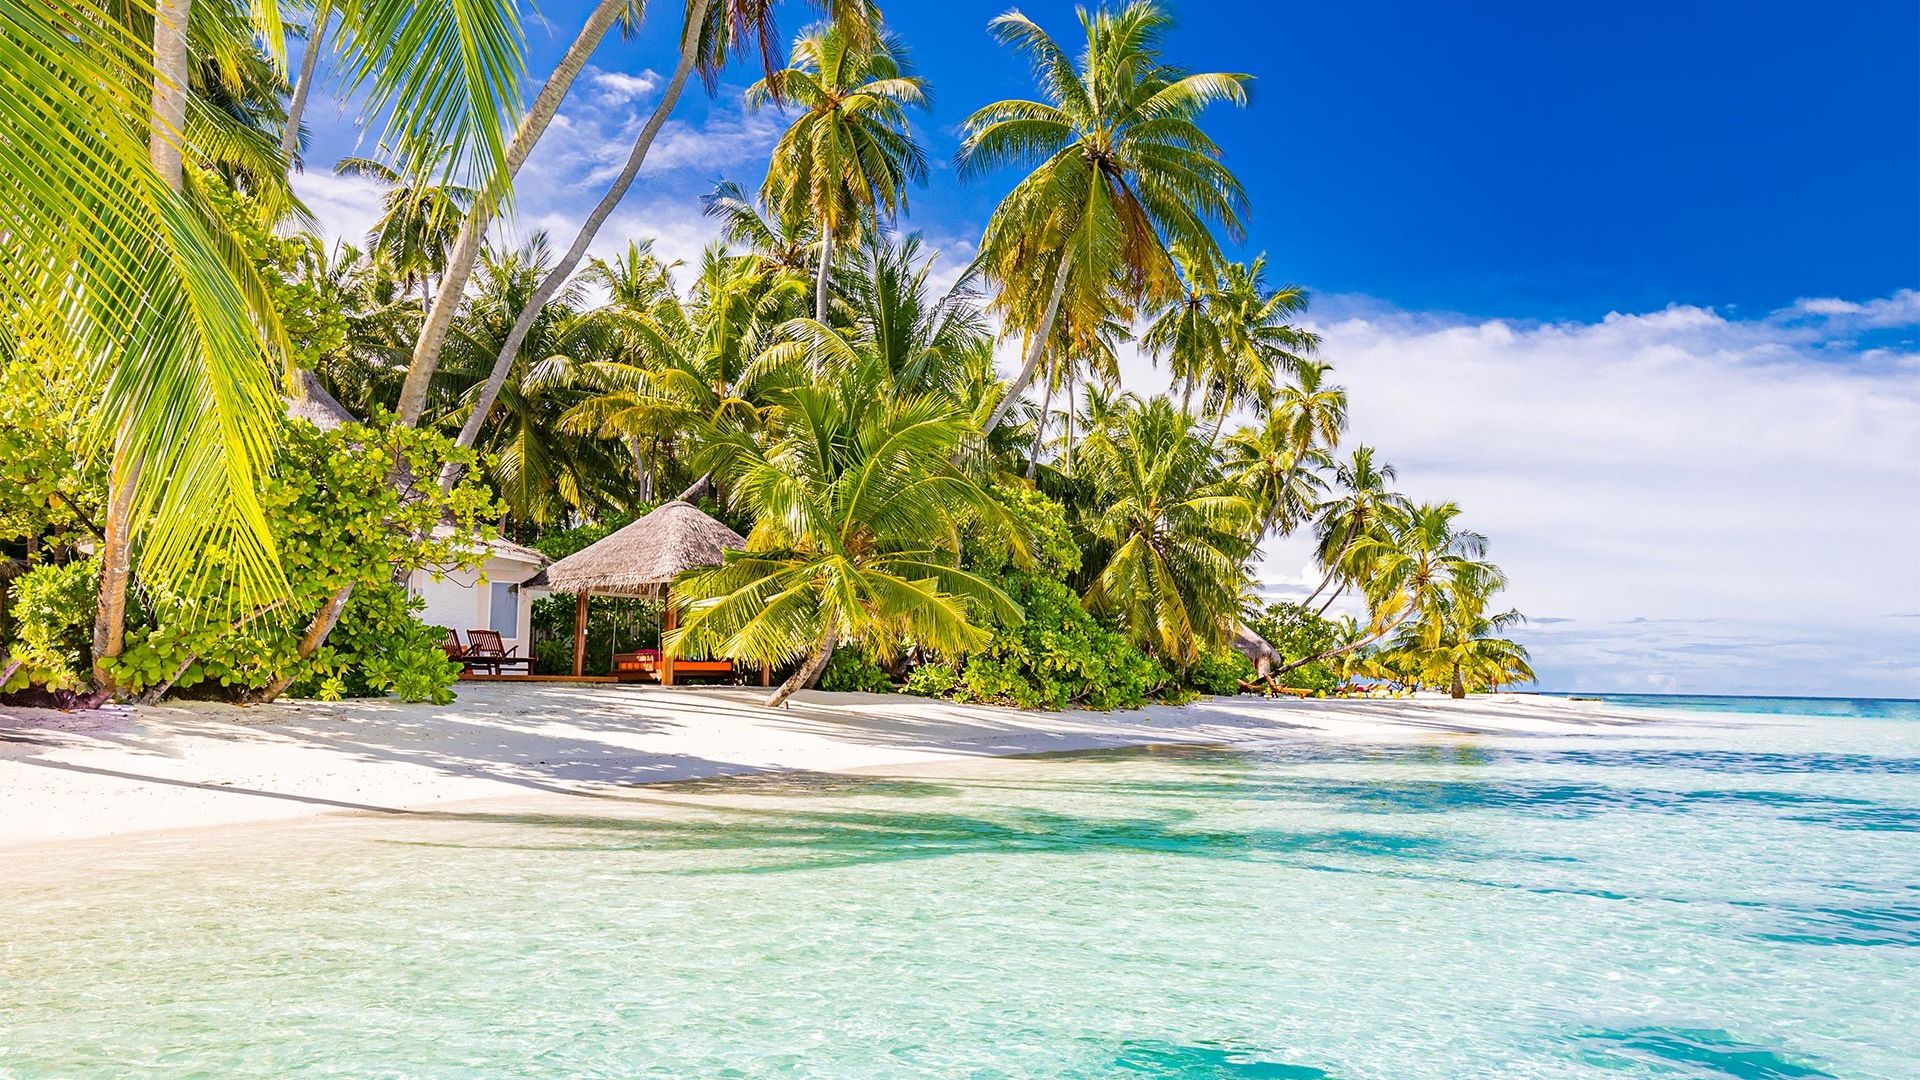 Sejur plaja Maldive, 10 zile - august 2022